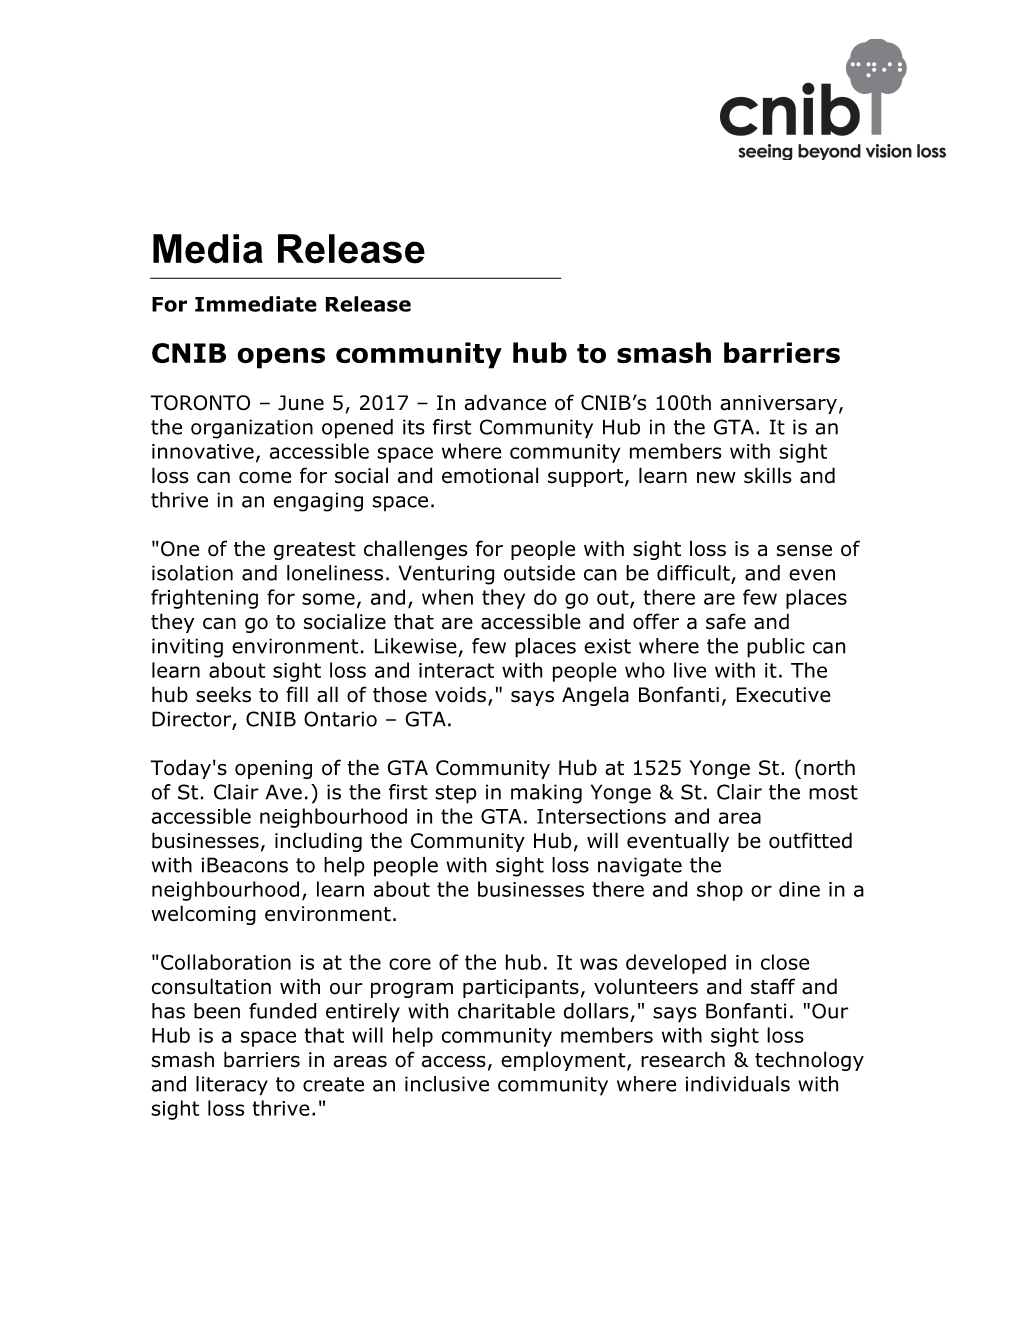 CNIB Opens Community Hub to Smash Barriers